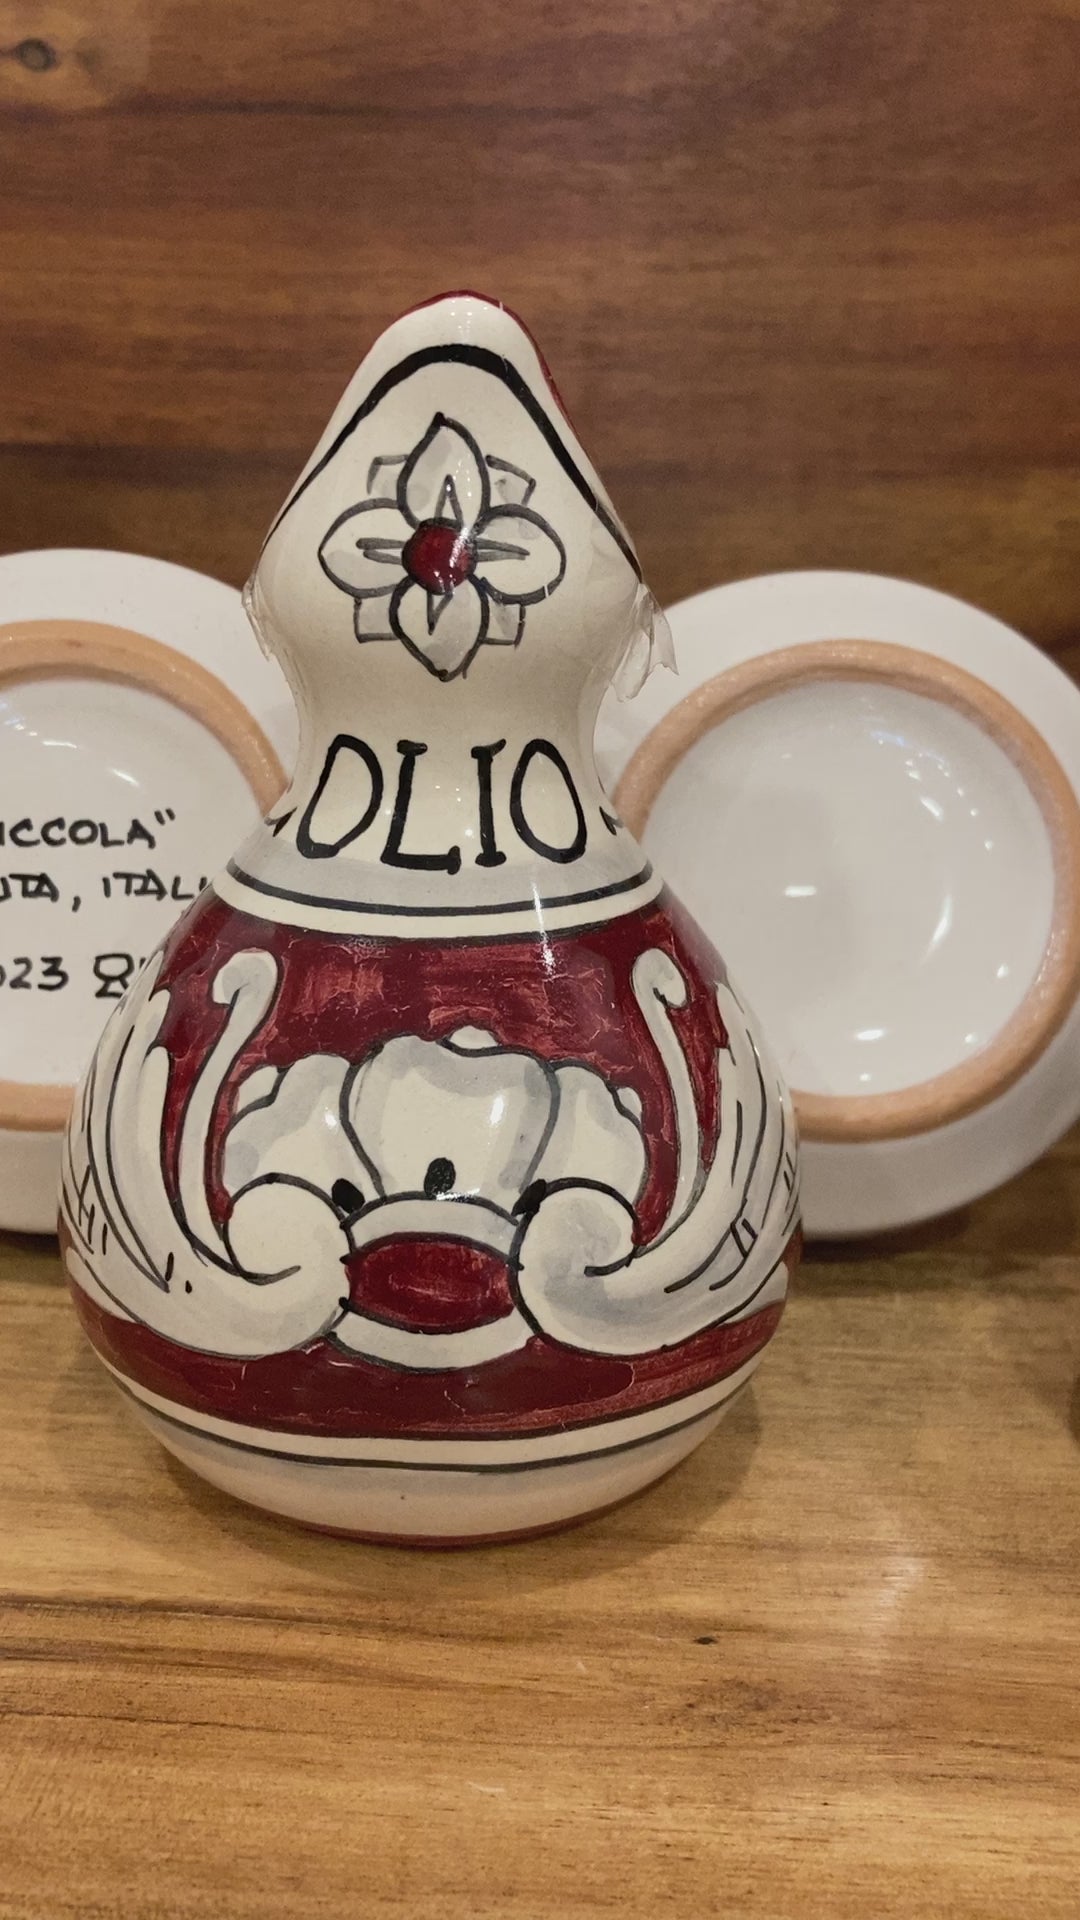 Oil & Vinegar Majolica Italian Ceramic at Piccola Italian Ceramics